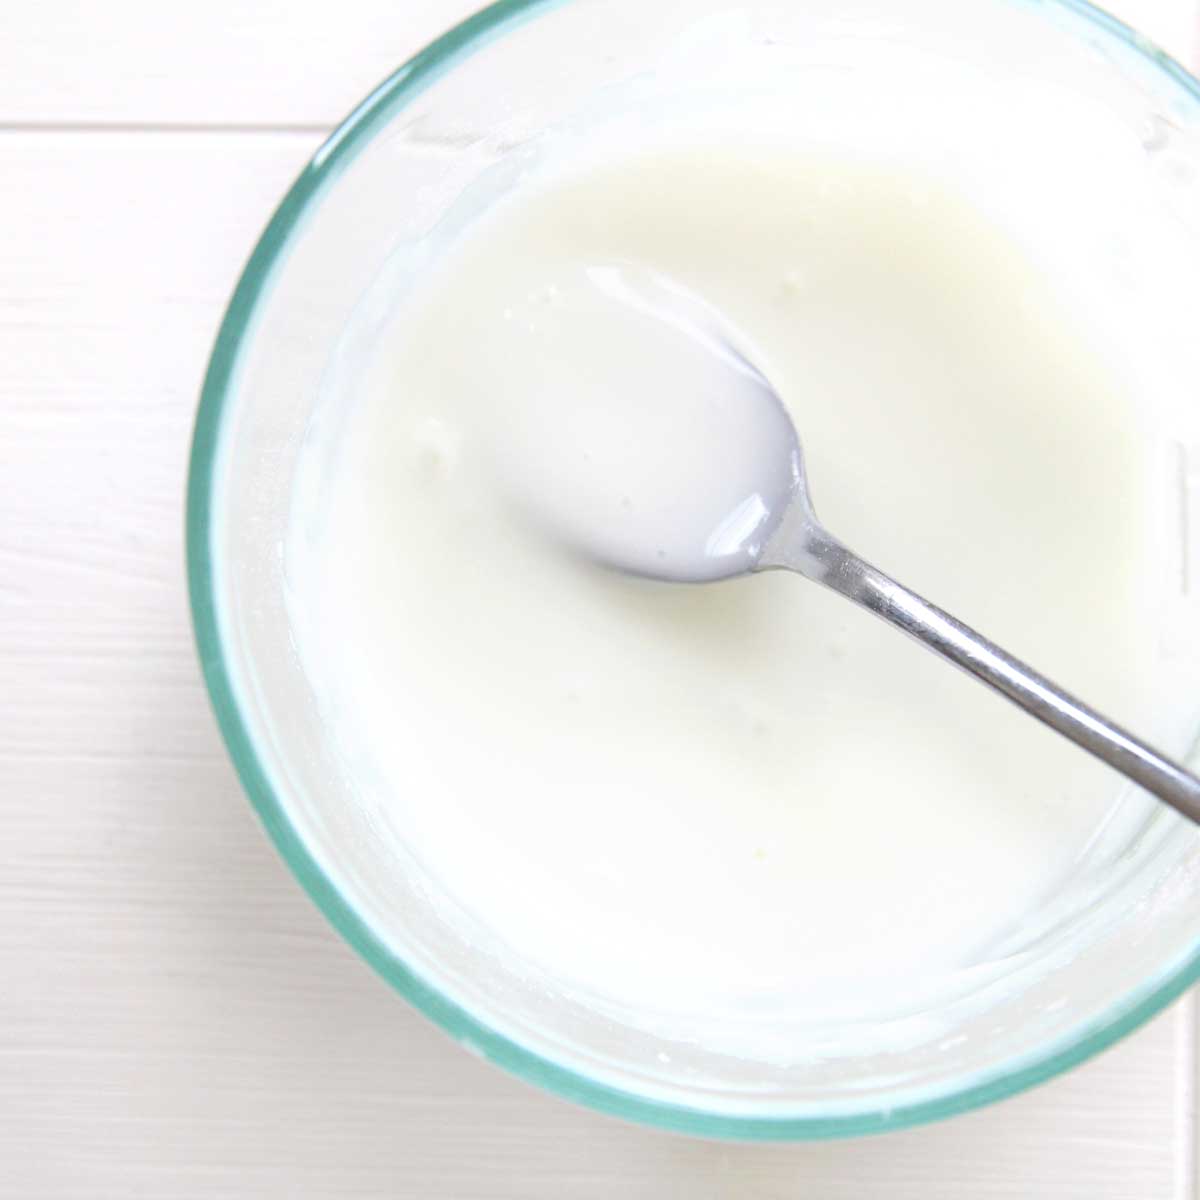 Simple 2-Ingredient Greek Yogurt Icing - Whipped Cream Recipes